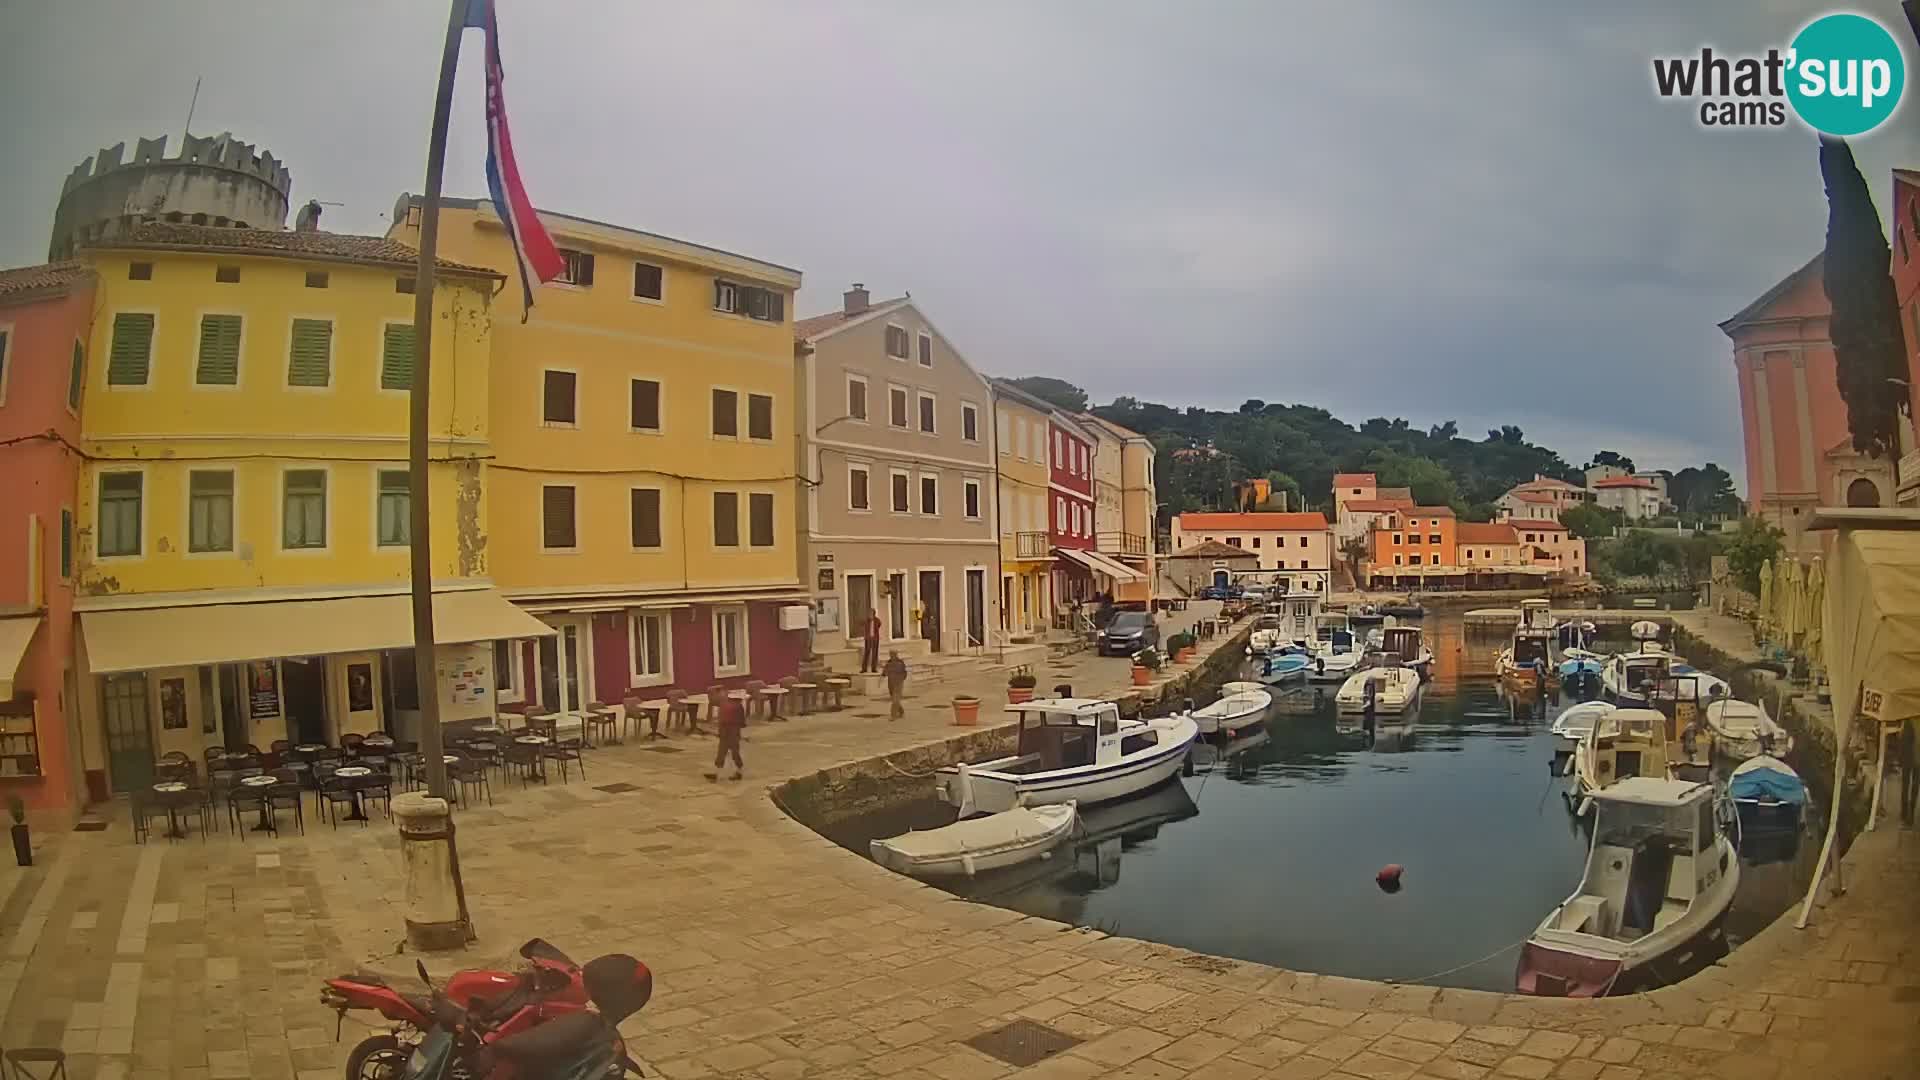 Webcam Live – The harbor of Veli Lošinj